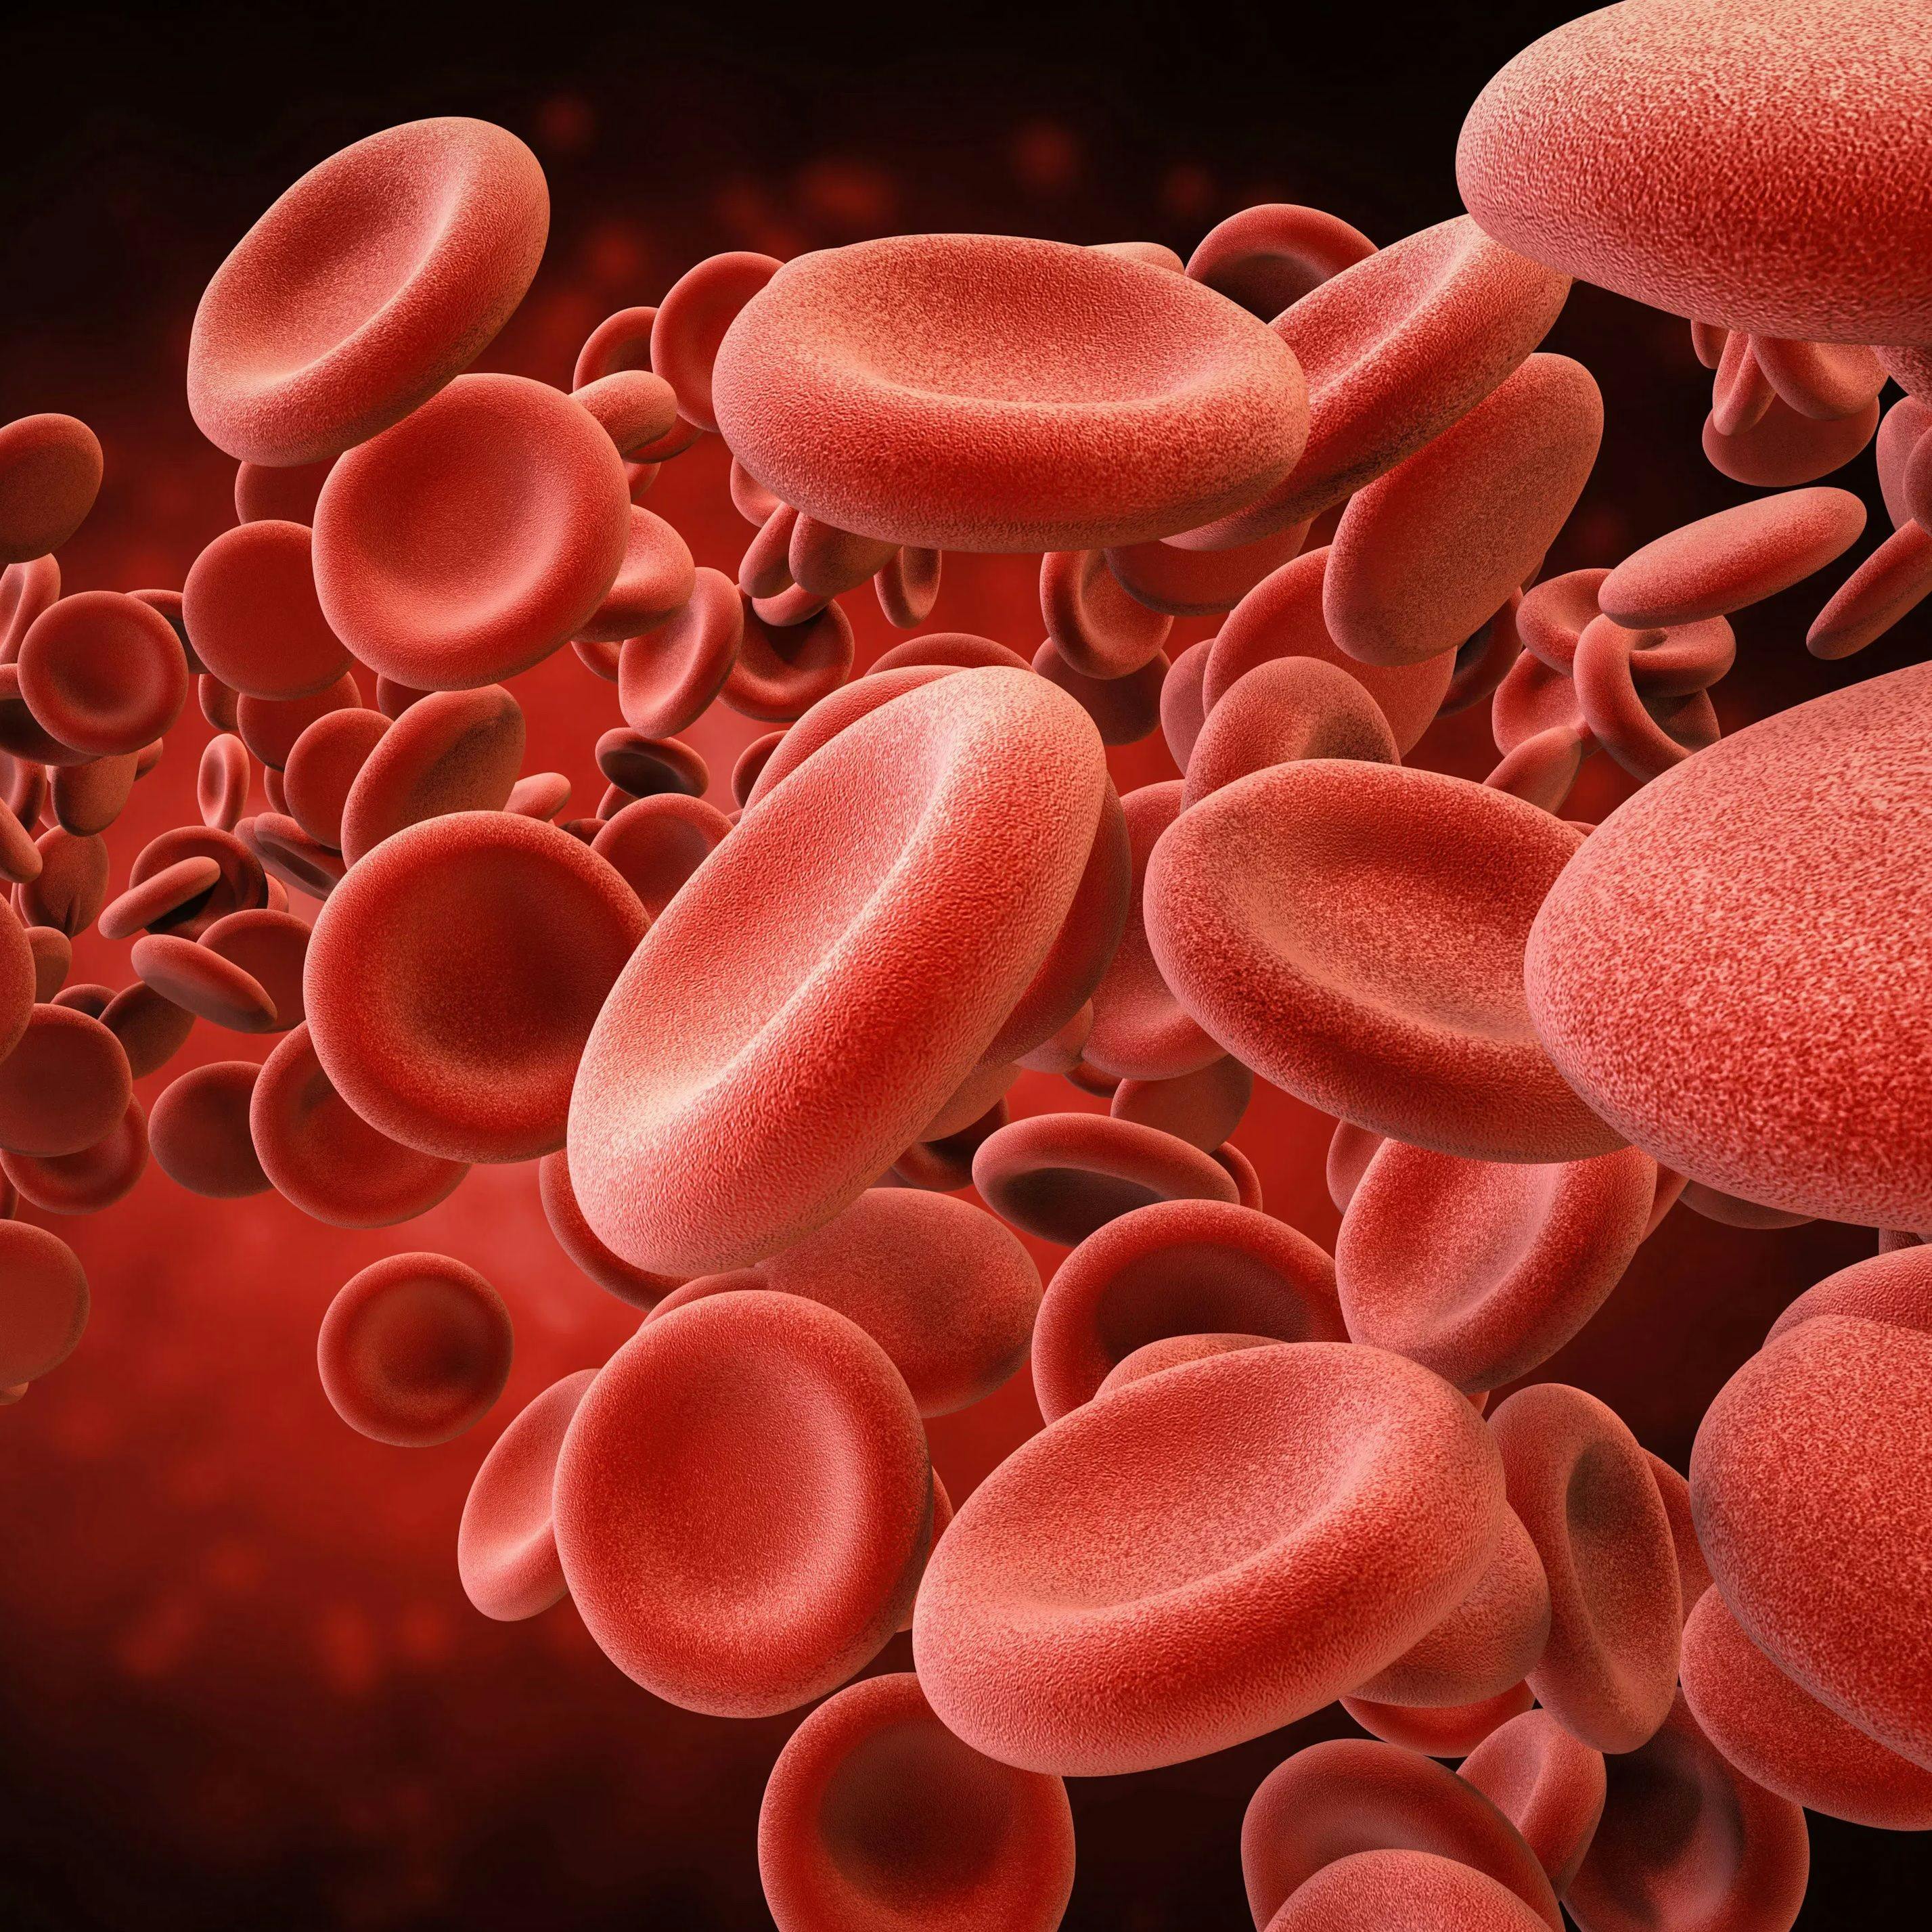 Blood cells | Image Credit: Fotolia